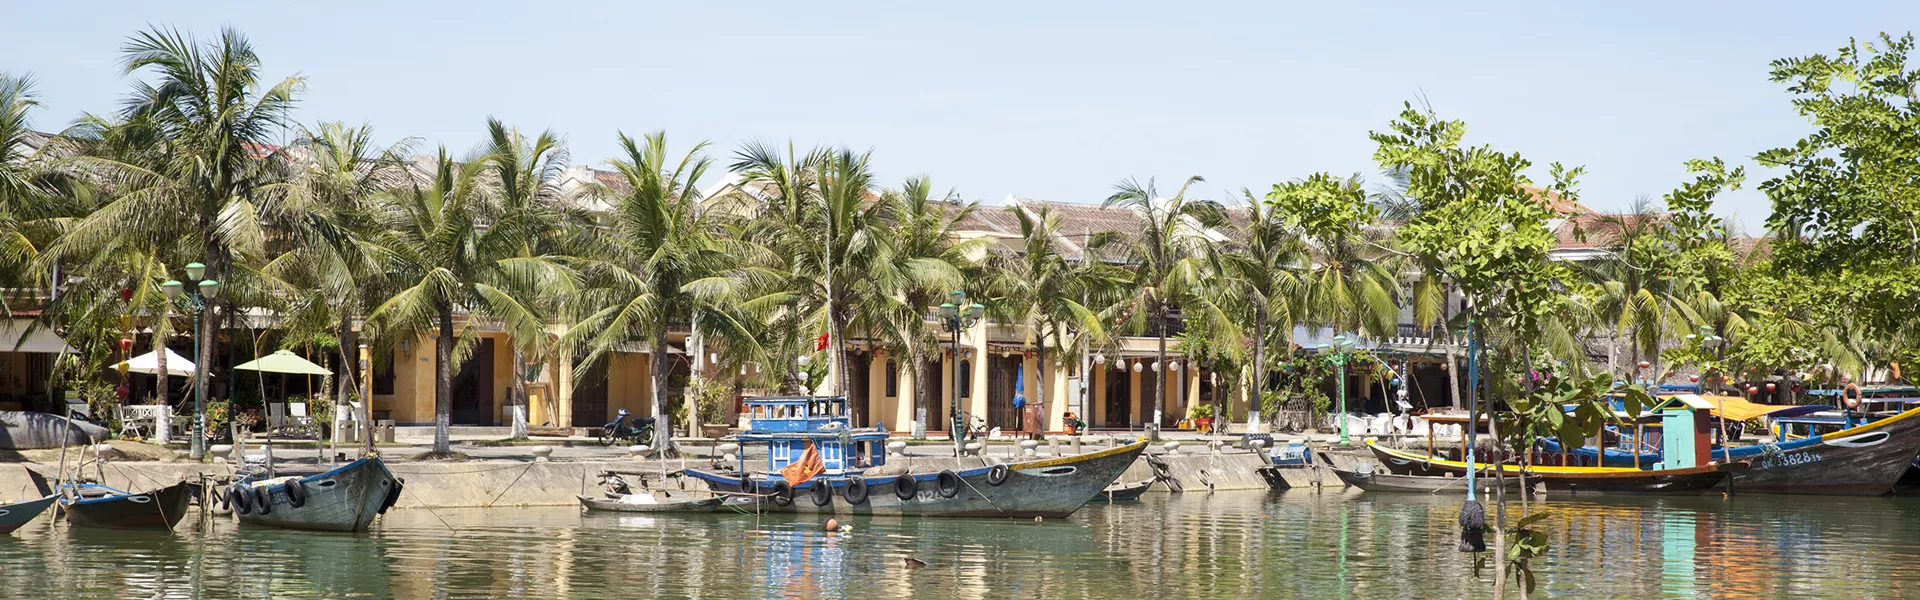 Vietnam Mekong Delta Boats 